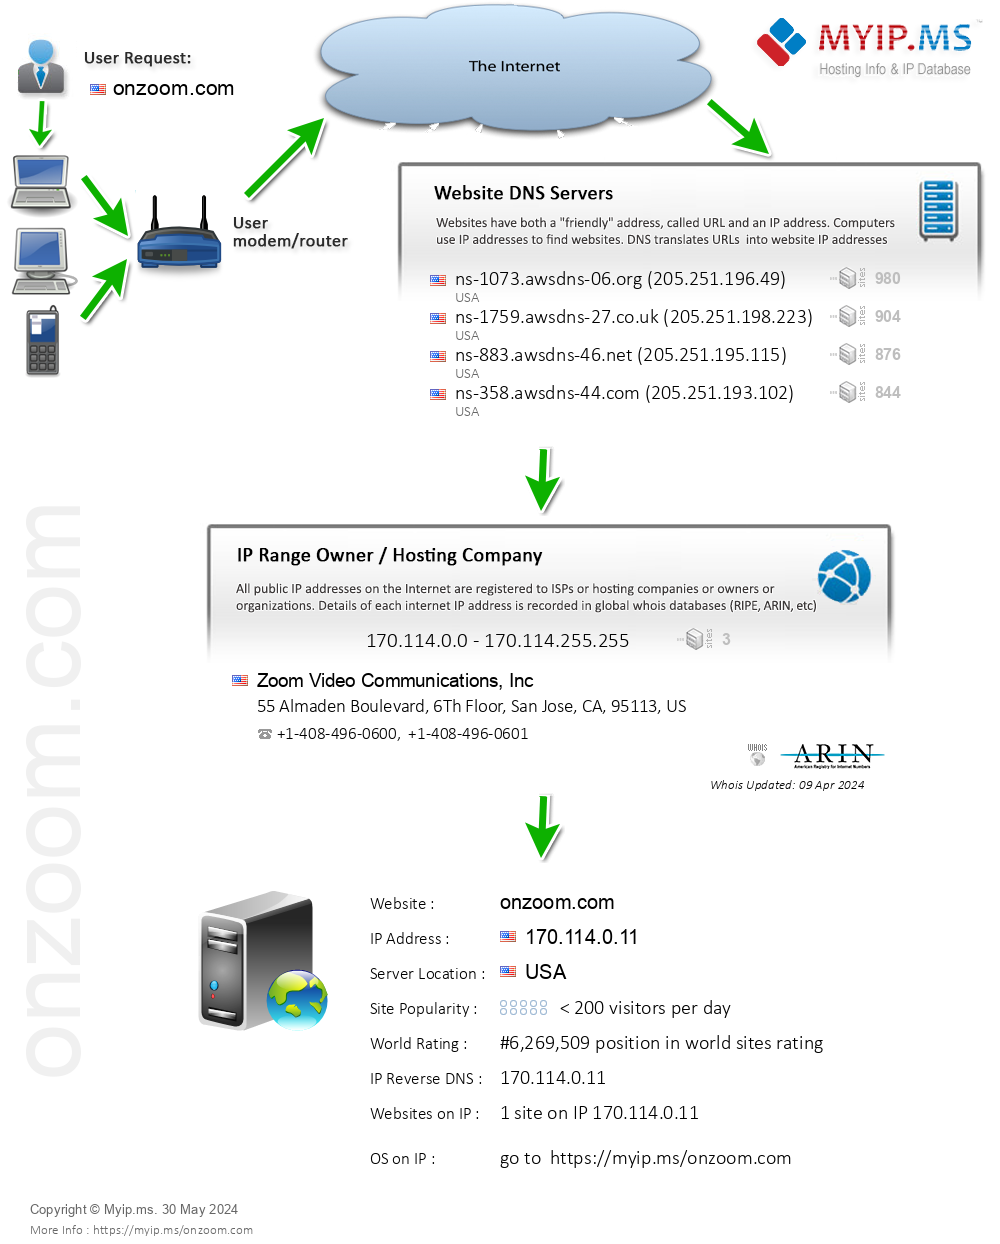 Onzoom.com - Website Hosting Visual IP Diagram